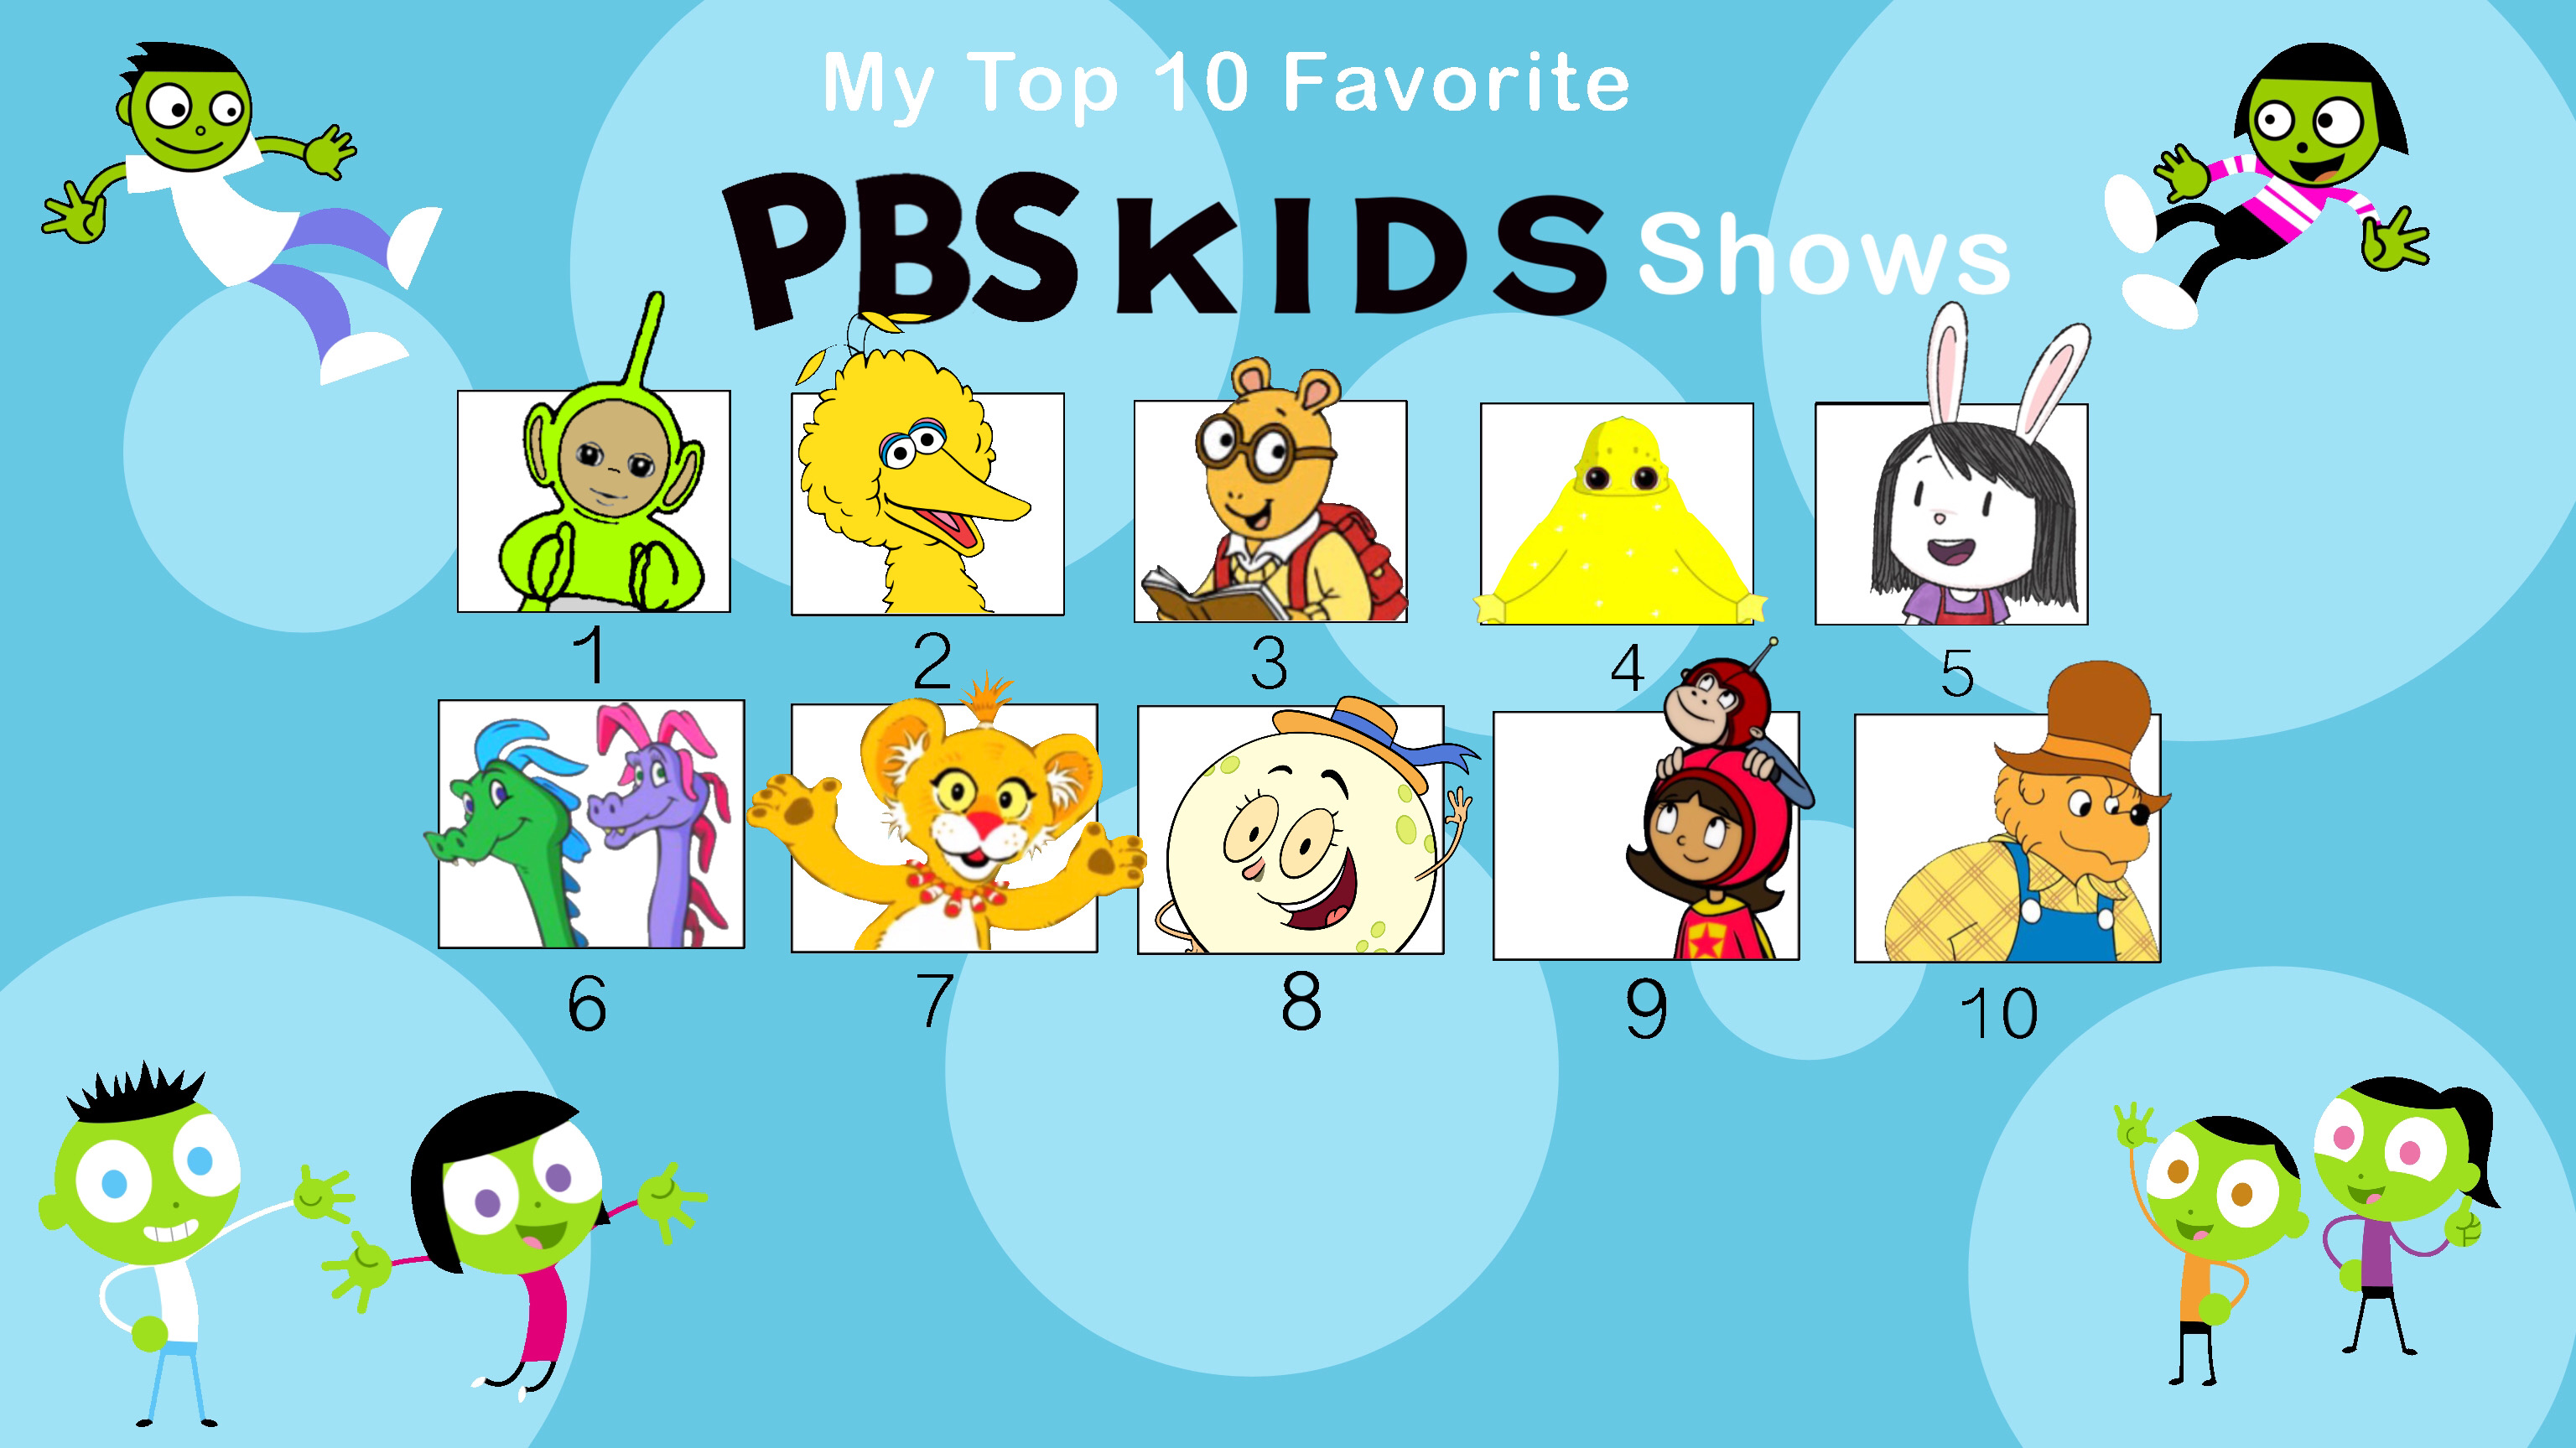 My Top 10 Favorite PBS kids Shows by mcdnalds2016 on DeviantArt